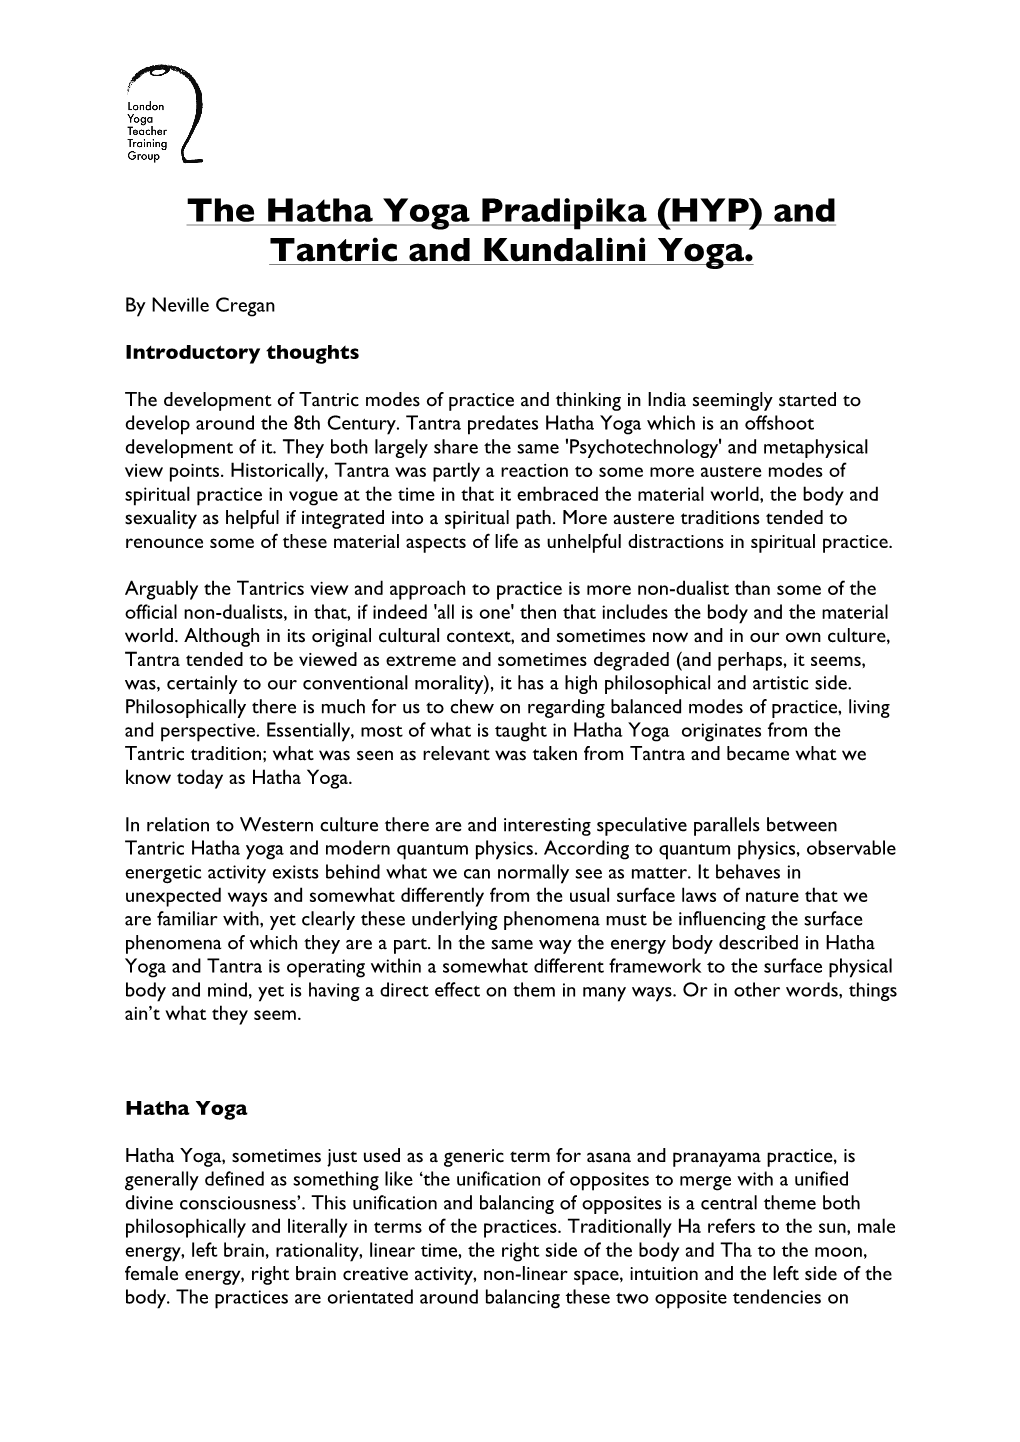 The Hatha Yoga Pradipika (HYP) and Tantric and Kundalini Yoga